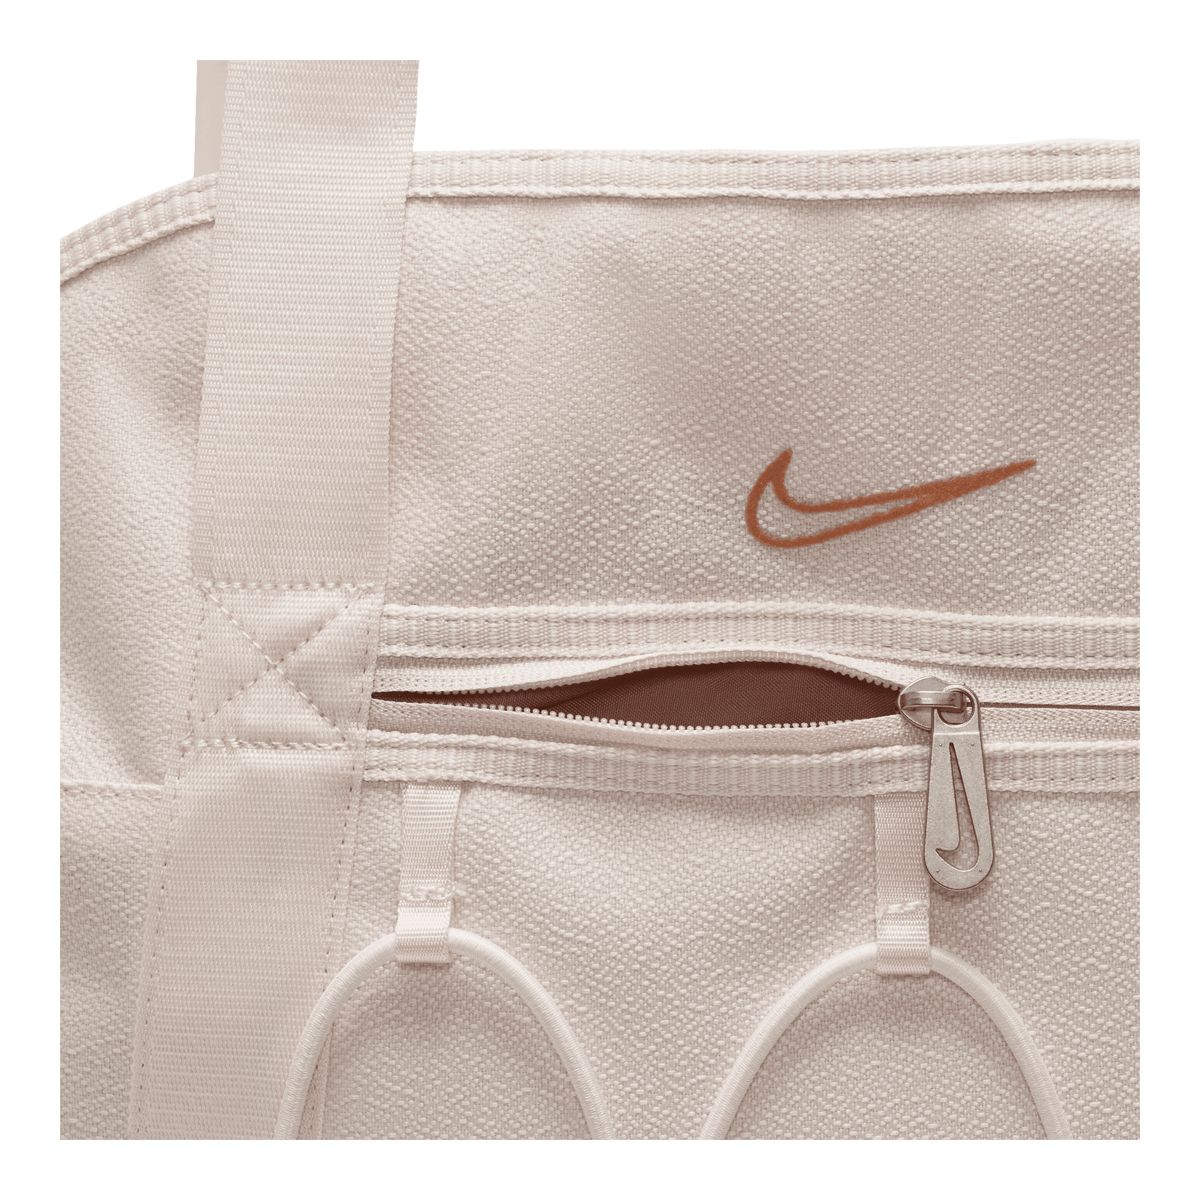 Nike Women's One Tote Bag